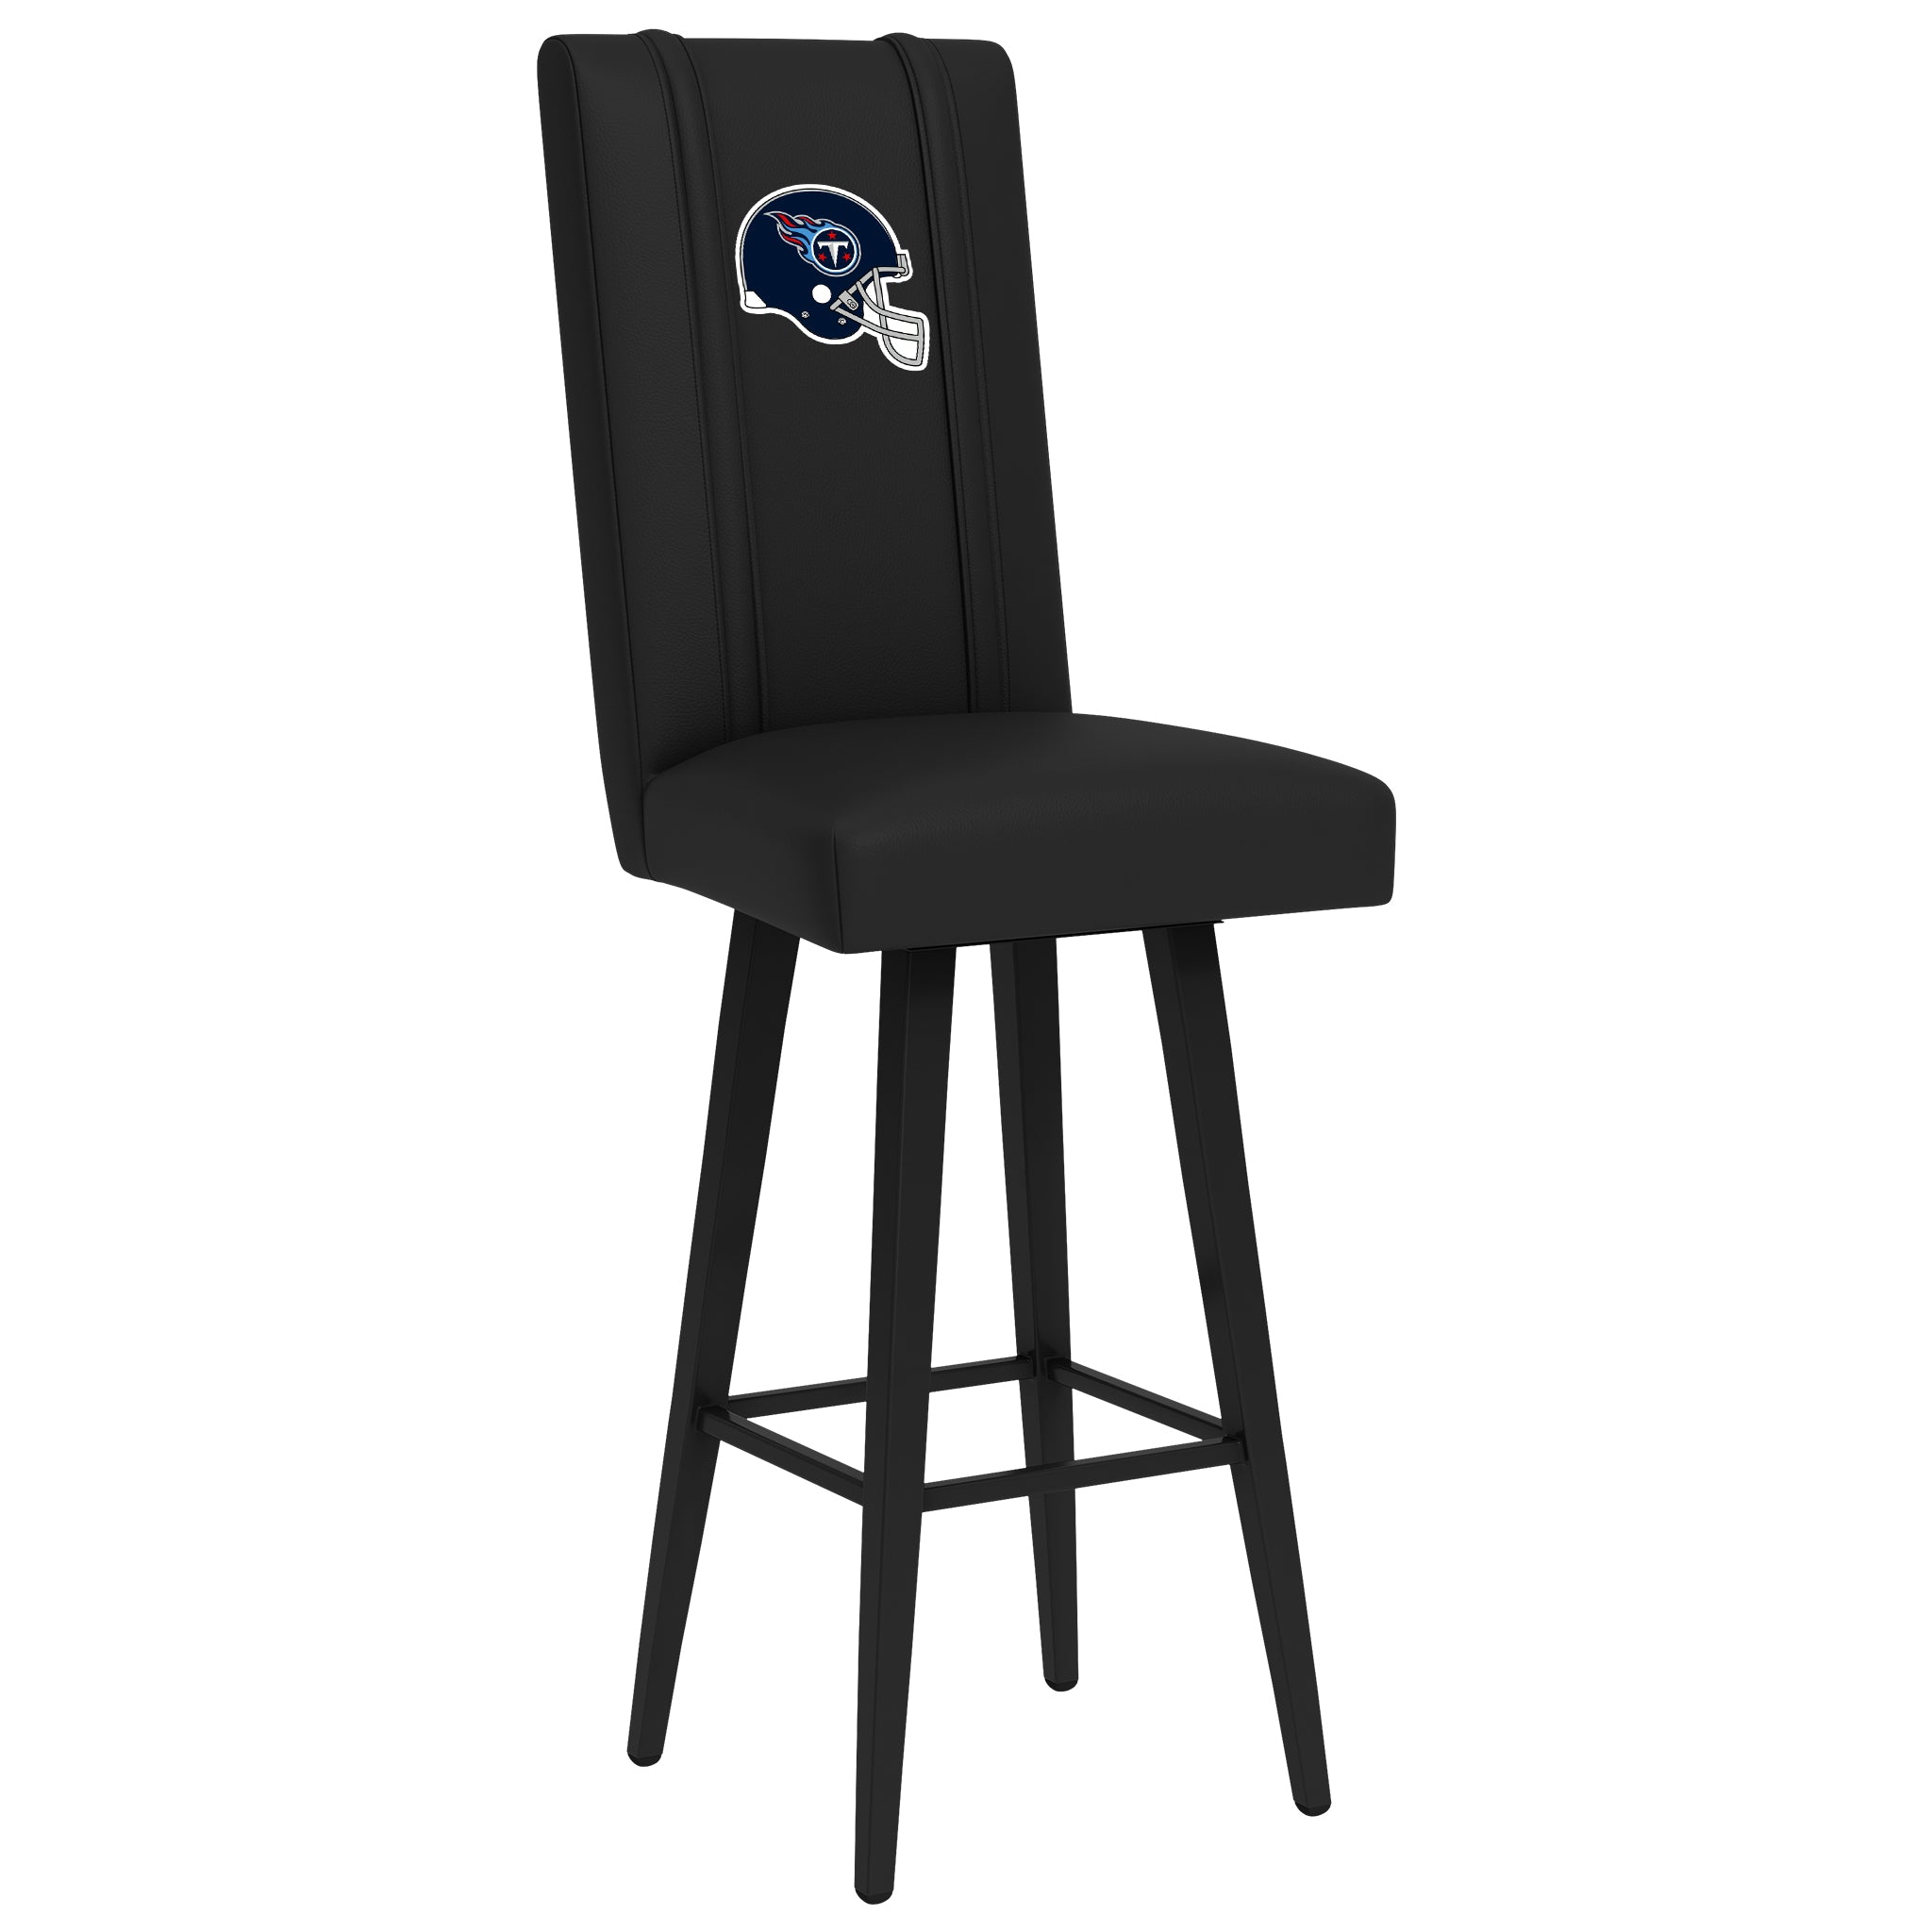 Tennessee Titans Swivel Bar Stool - Chair - Furniture - Kitchen